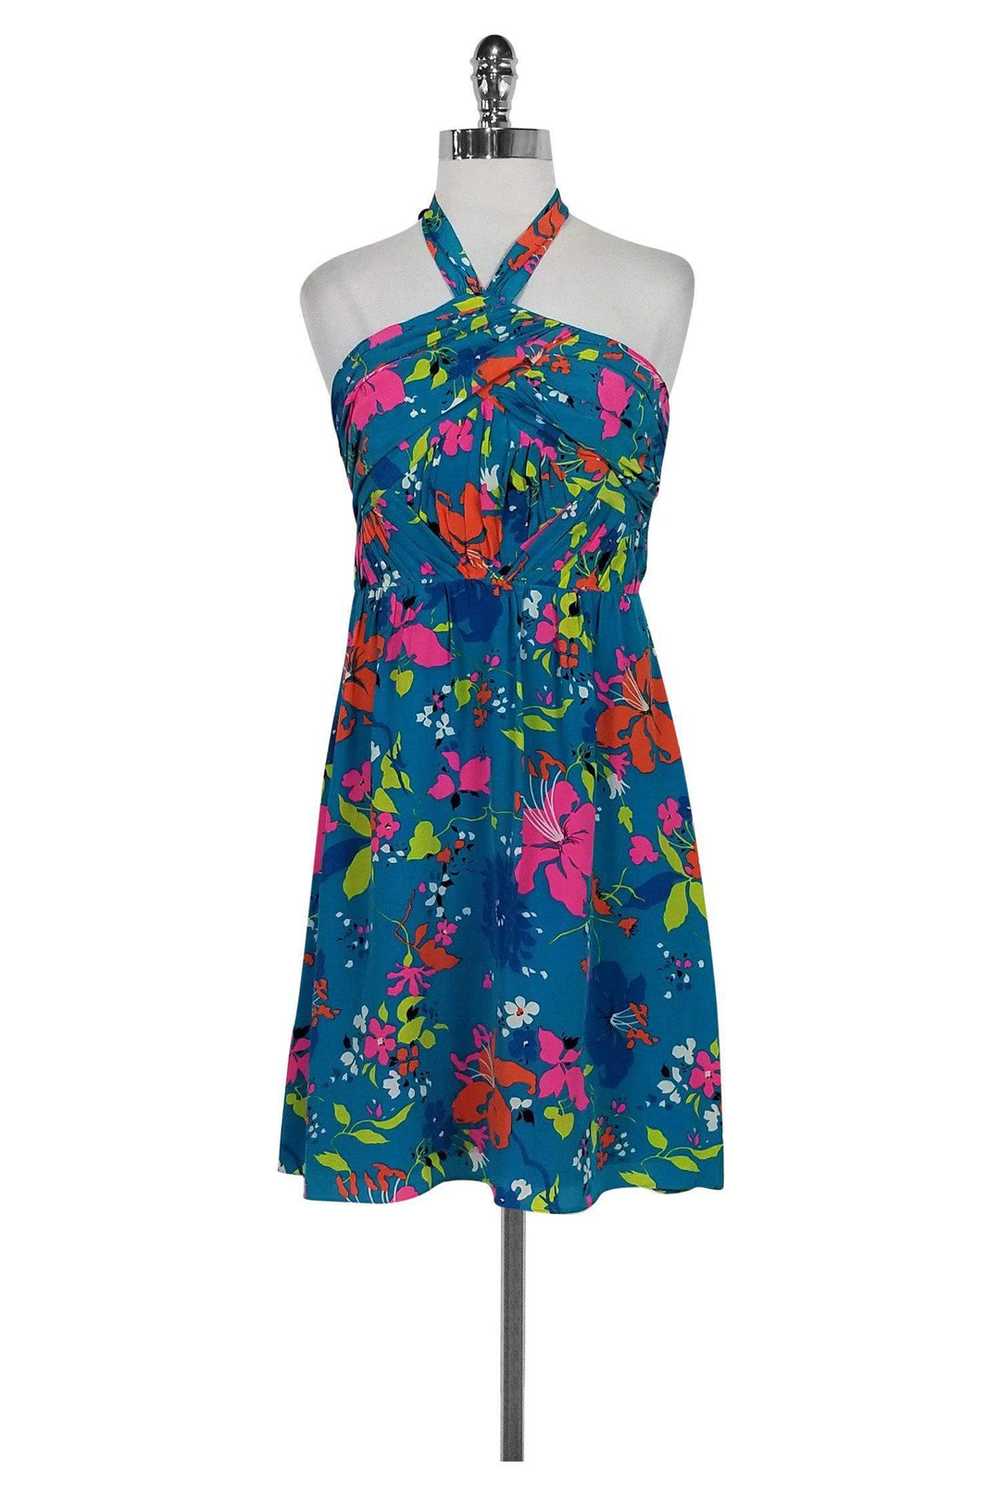 Shoshanna - Blue Floral Print Dress Sz 6 - image 1